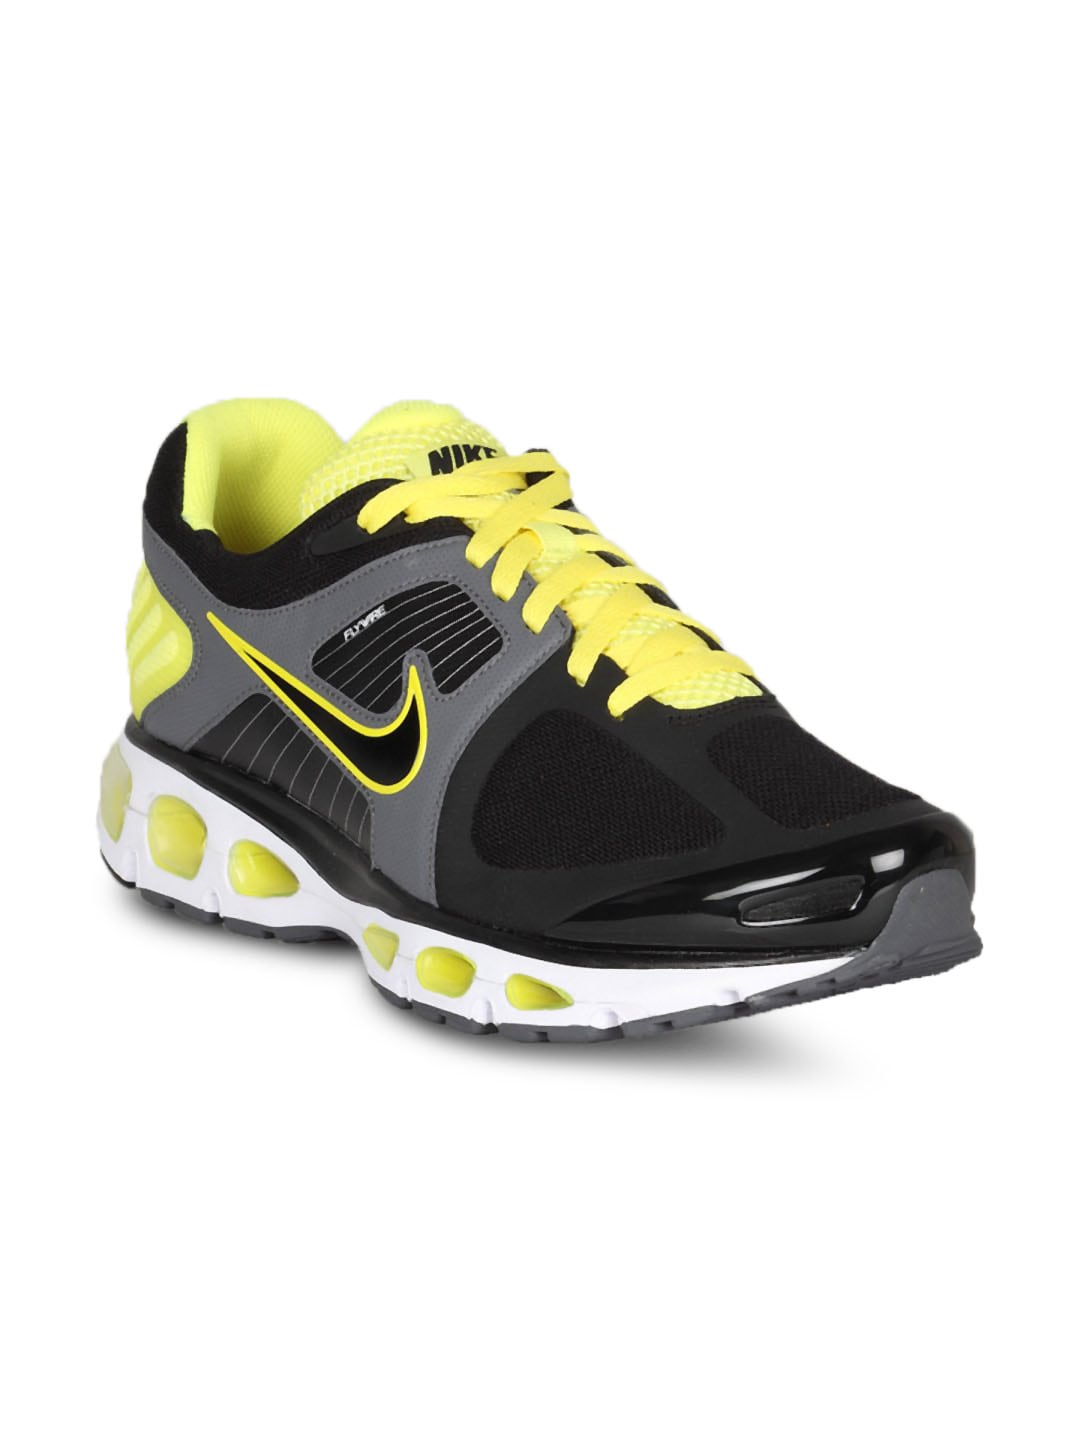 Nike Men's Air Max Tailwind 3 Black Yellow Shoe